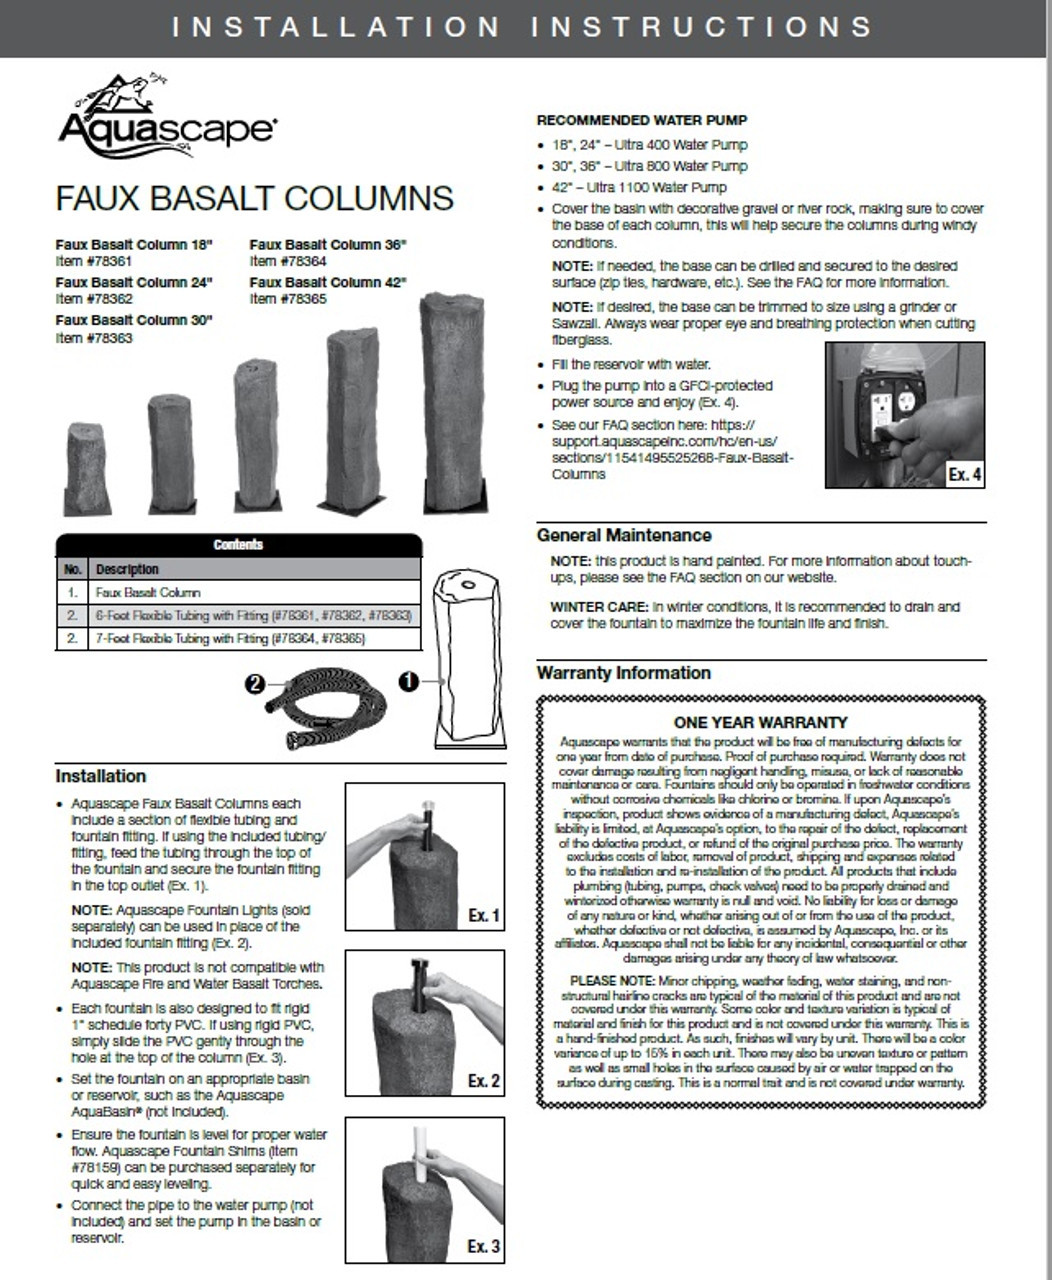 Aquascape Faux Basalt Column - 30"